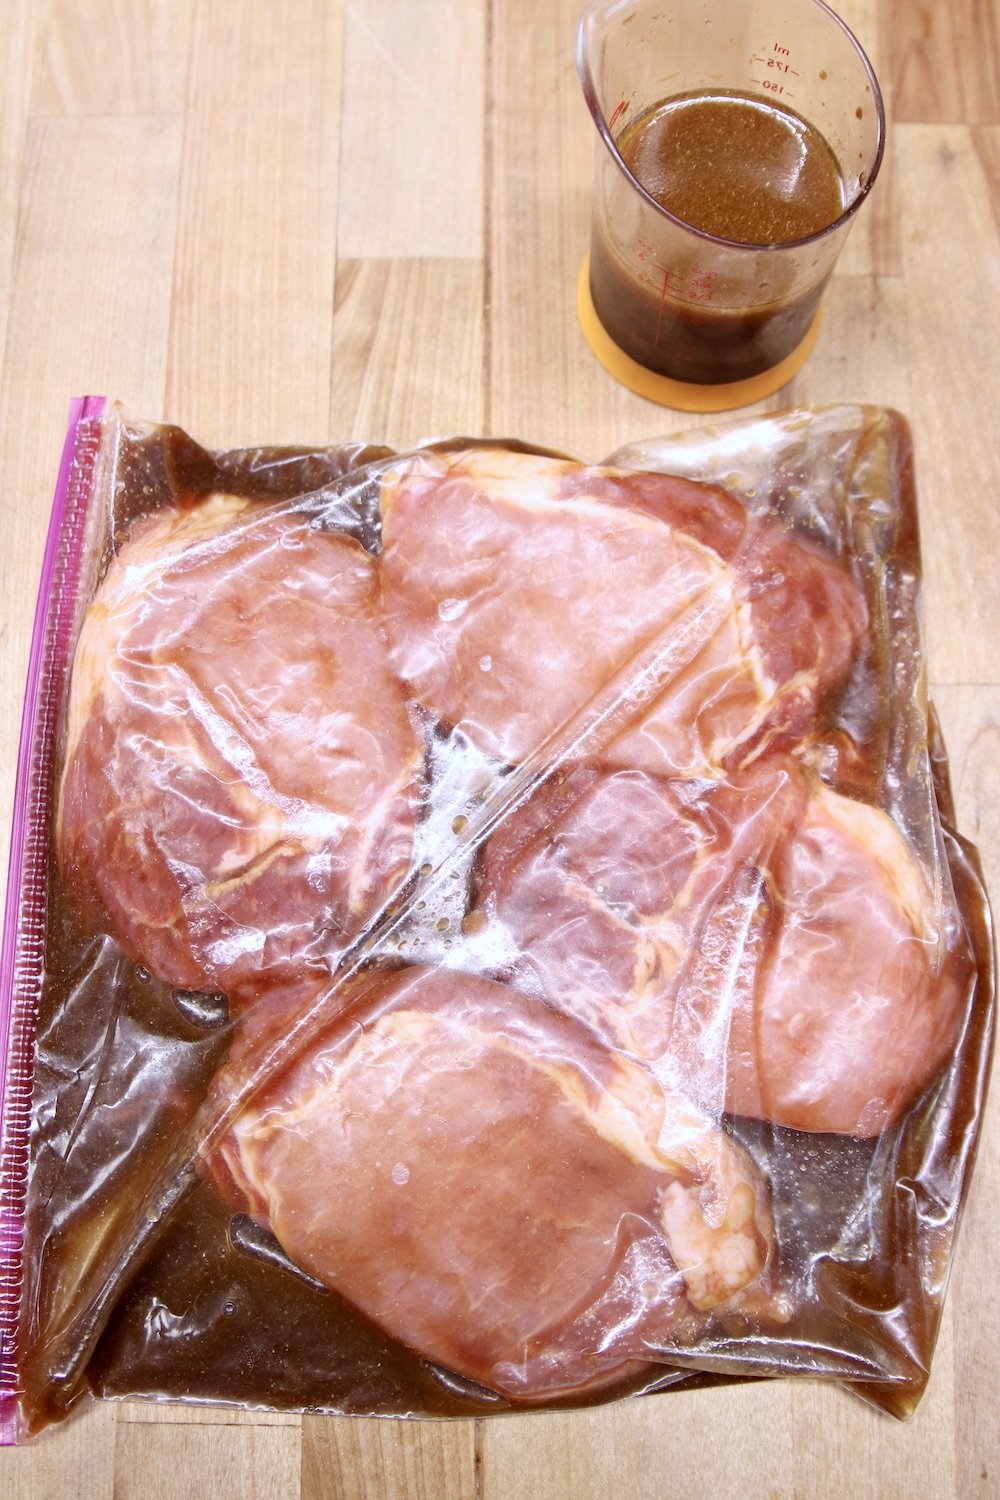 4 pork chops in a ziploc bag with marinade